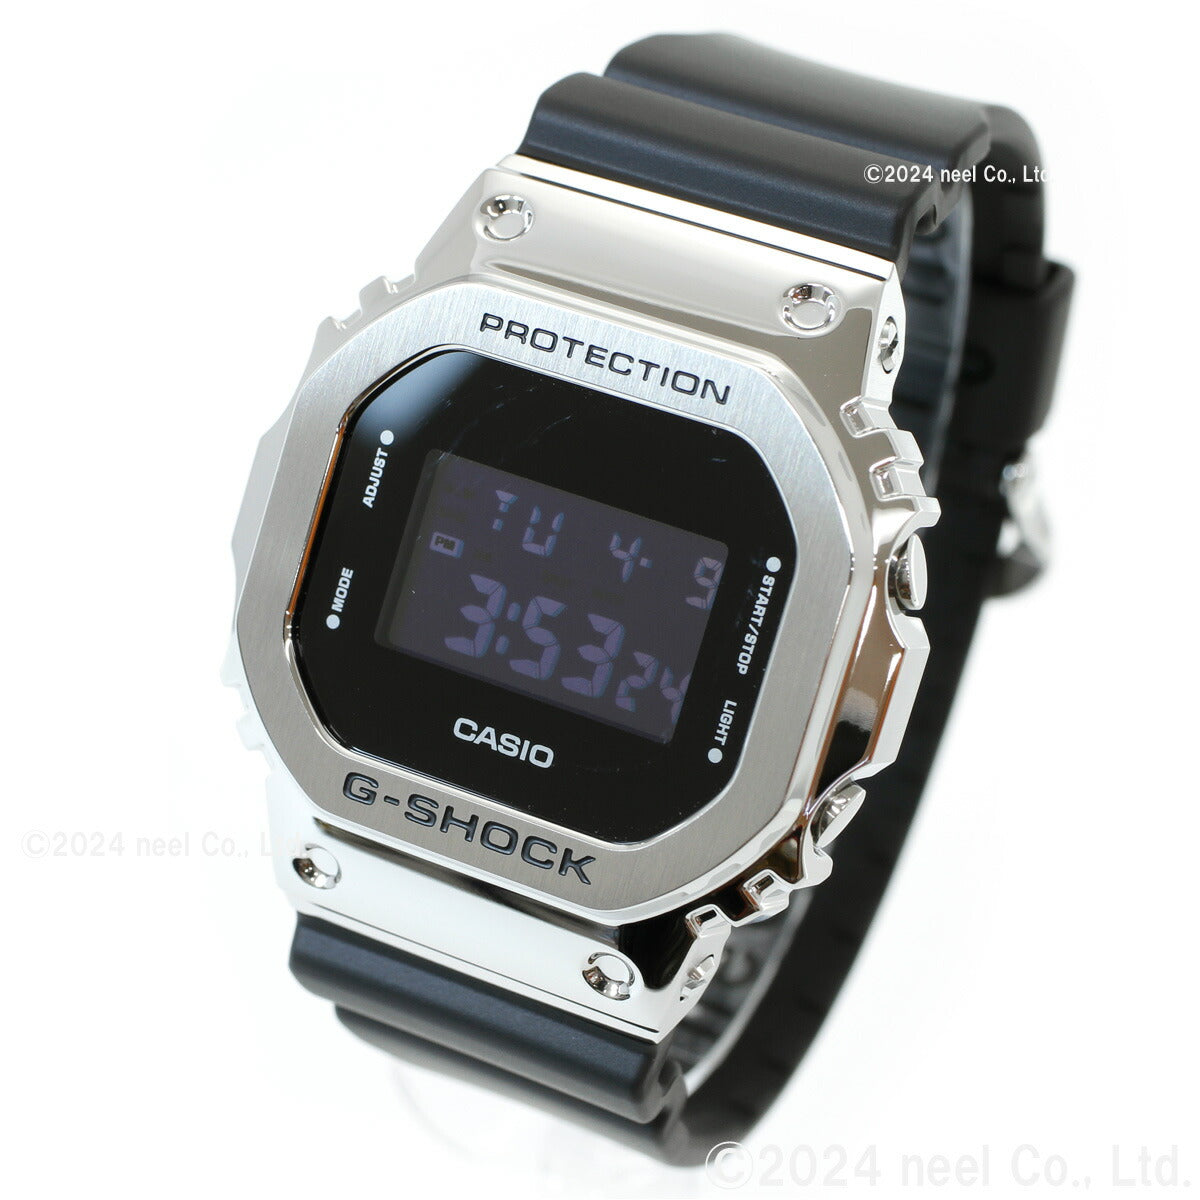 G-SHOCK デジタル カシオ Gショック CASIO 腕時計 メンズ GM-5600U-1JF シルバー ブラック メタルカバー LEDバックライト